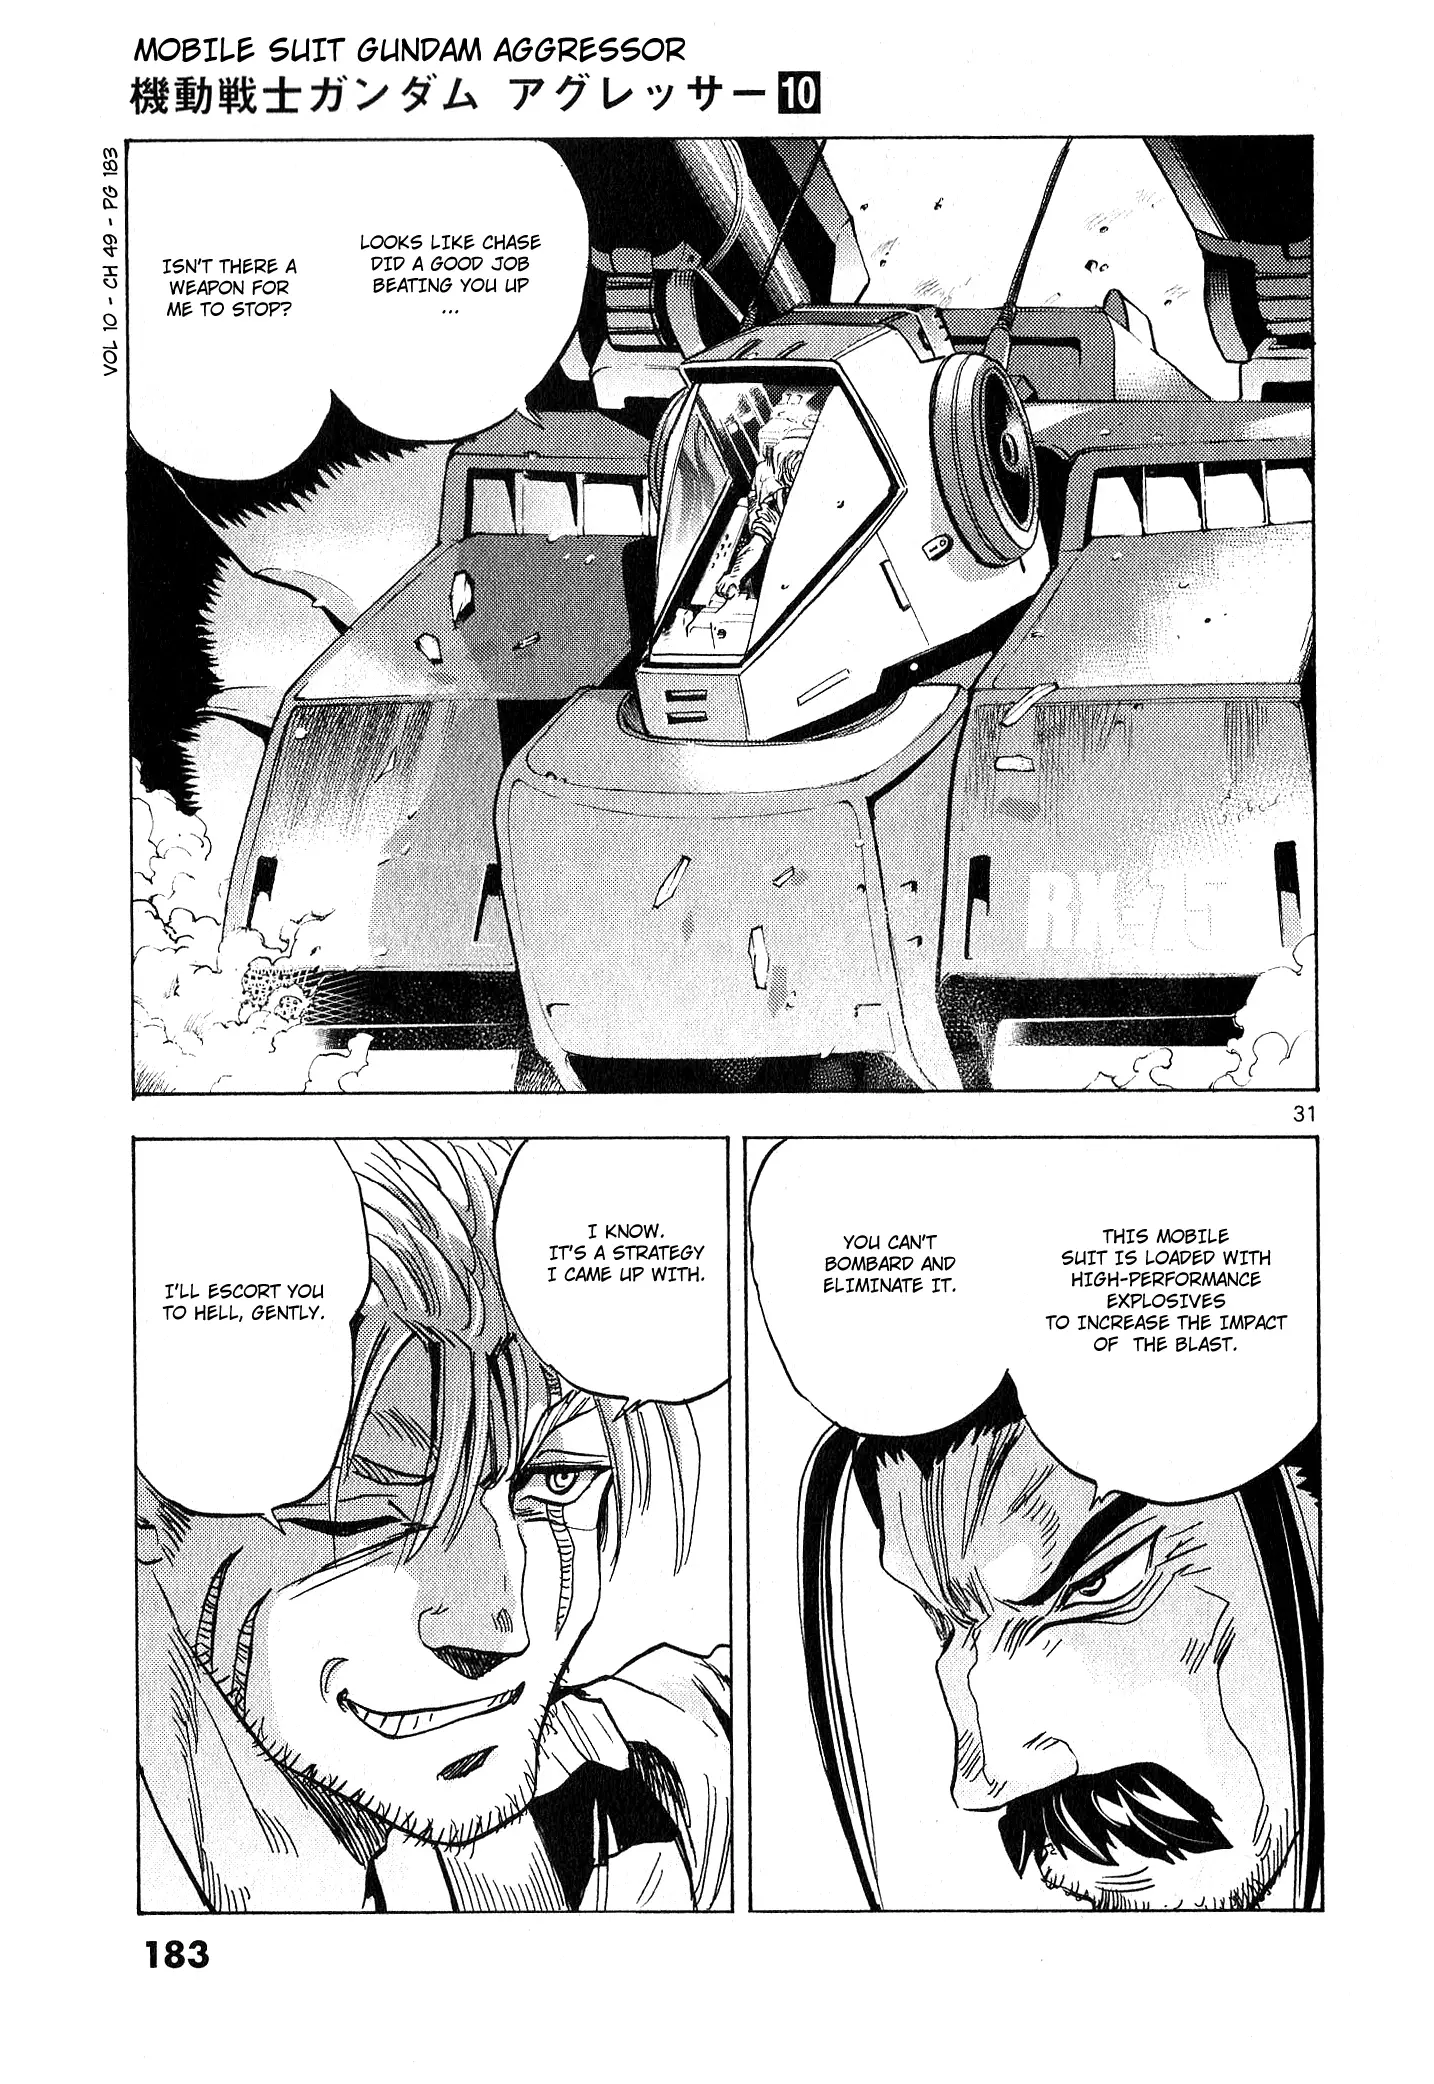 Mobile Suit Gundam Aggressor - 49 page 30-c959fe06